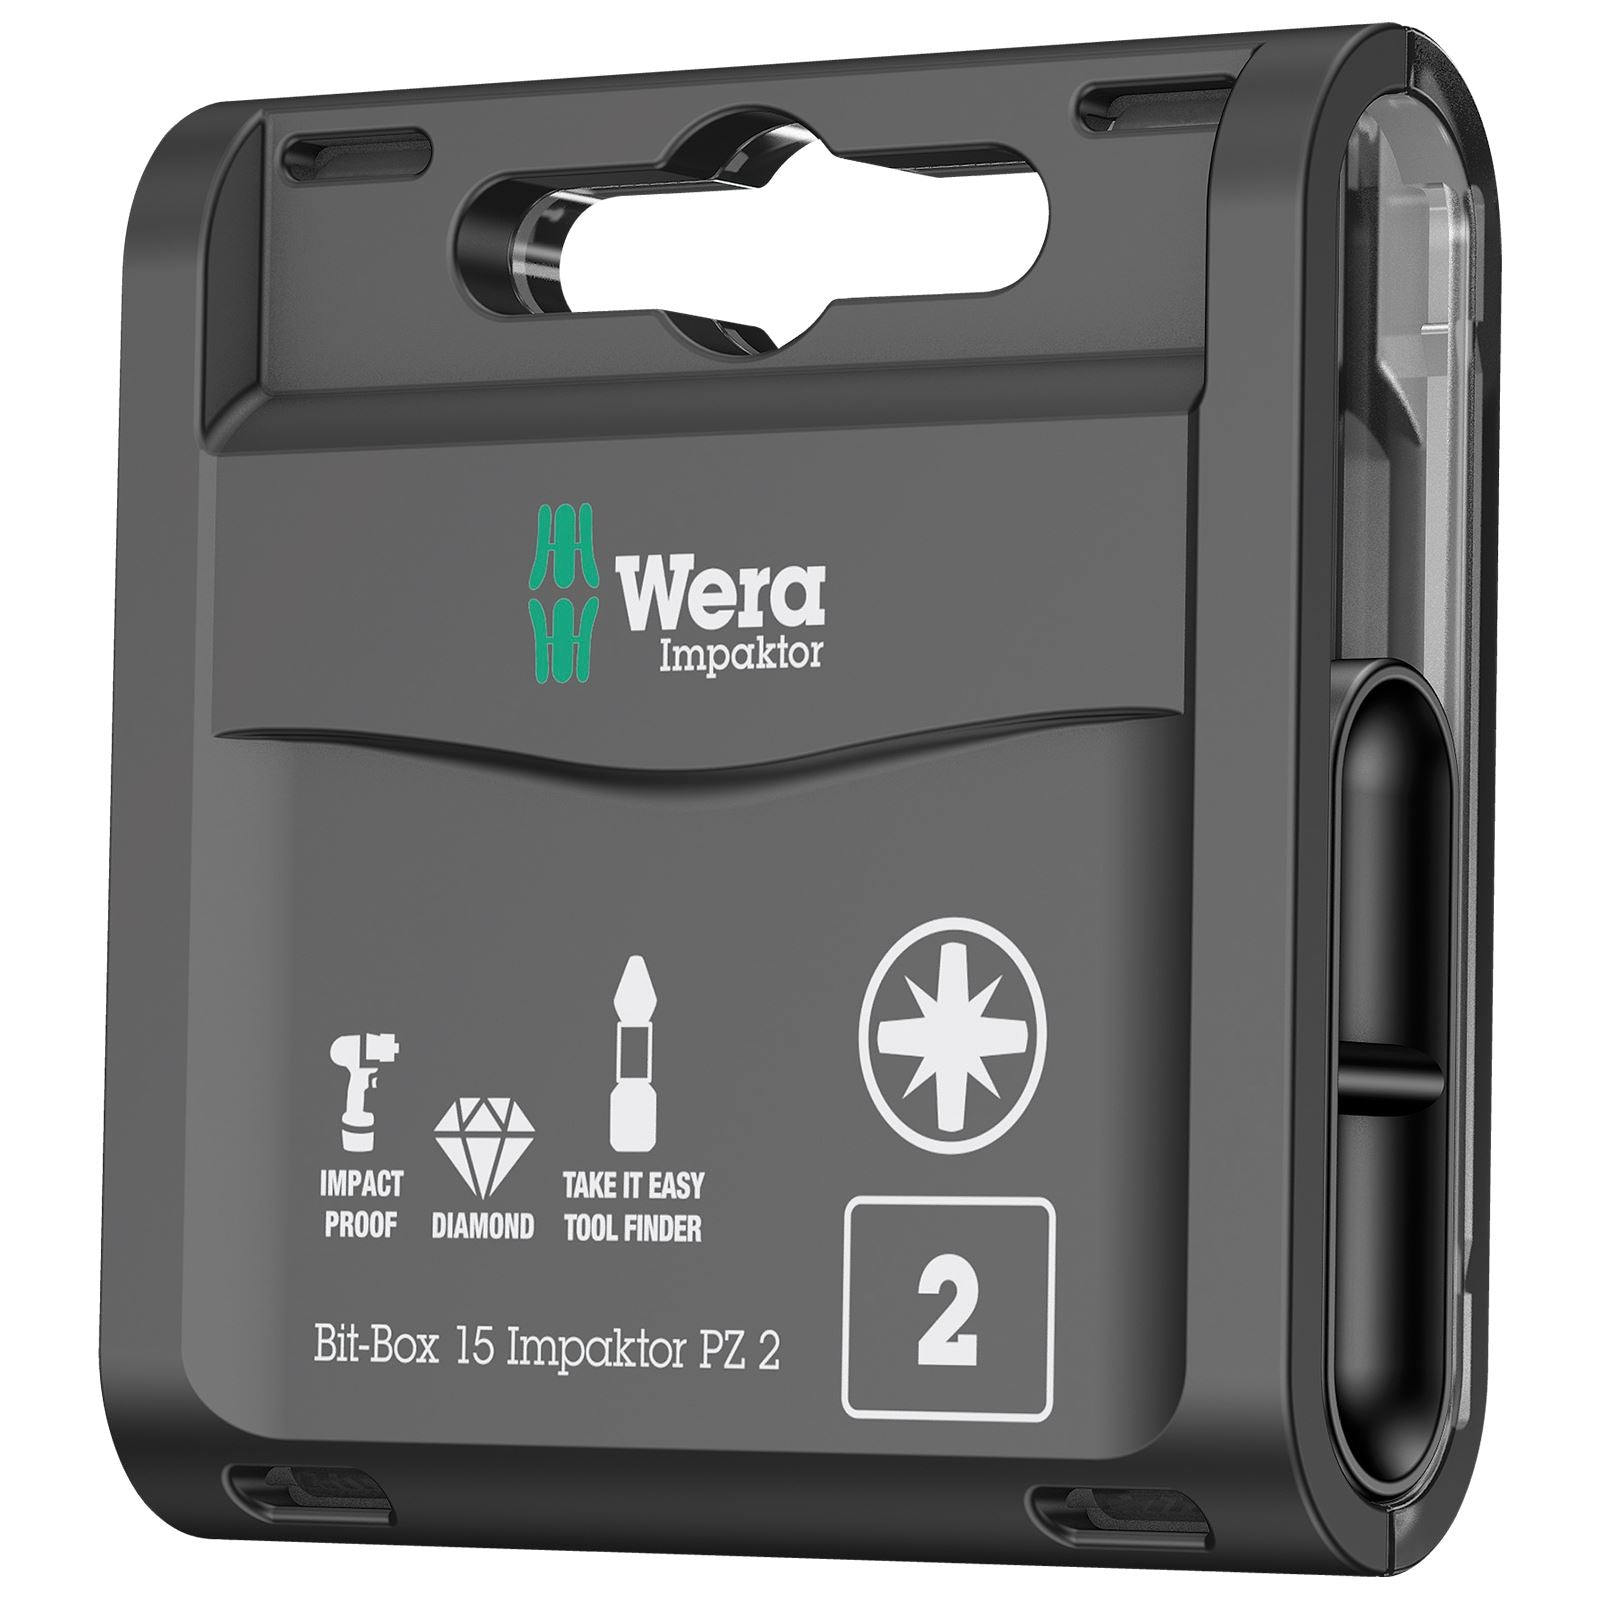 Wera Impaktor Bit Box PZ2 x 15 Bits Plus 897/4 Impaktor Magnetic Bit Holder 1/4" Hex